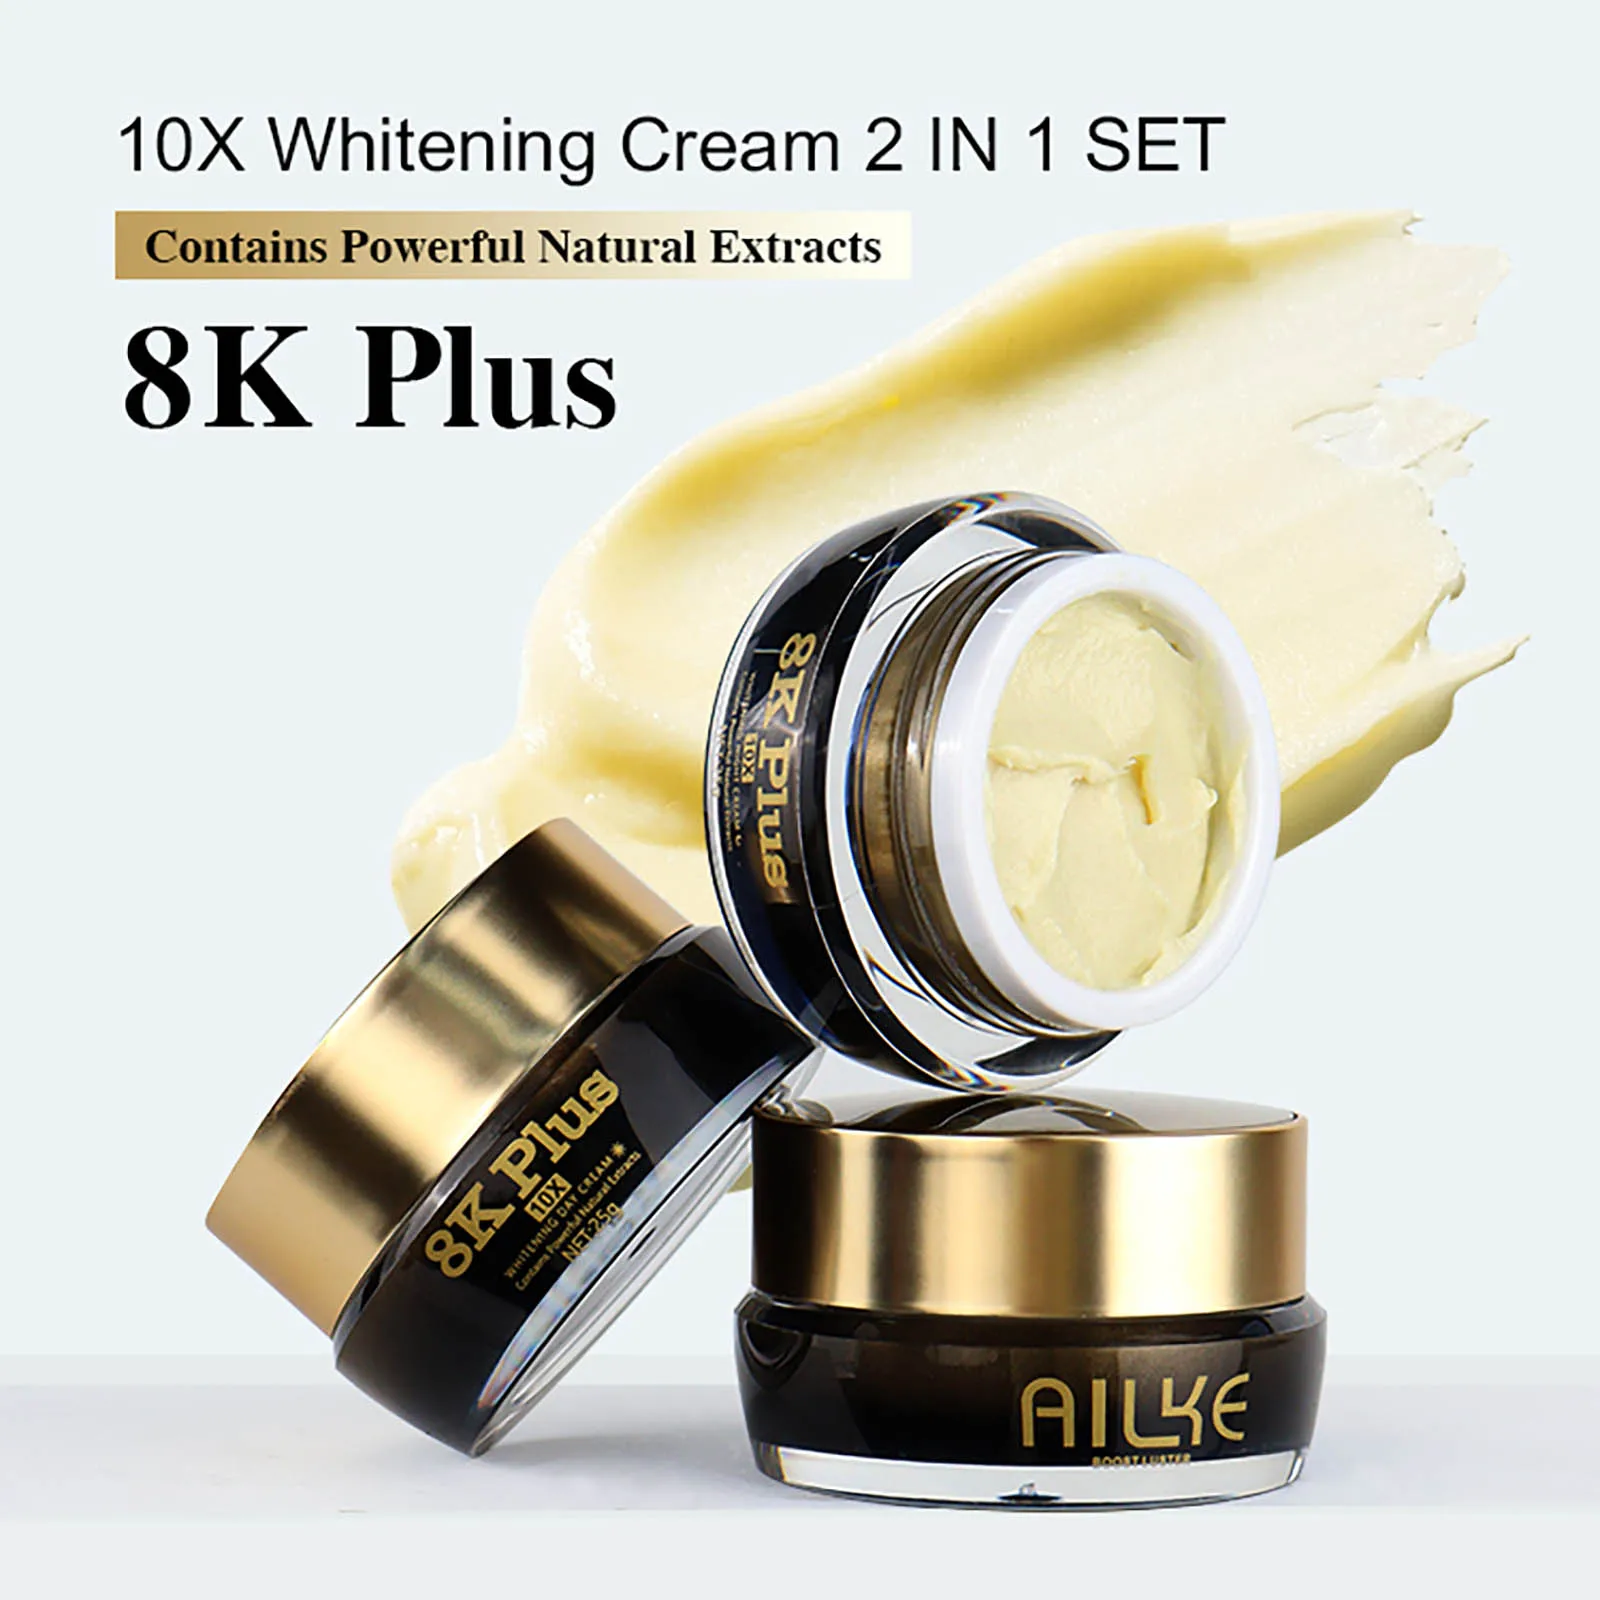 

AILKE Whitening Face Cream, Reduce Dark Spots, Sun Spots, Inhibit Melanin, With Collagen, Glutathione, For All Skin Types